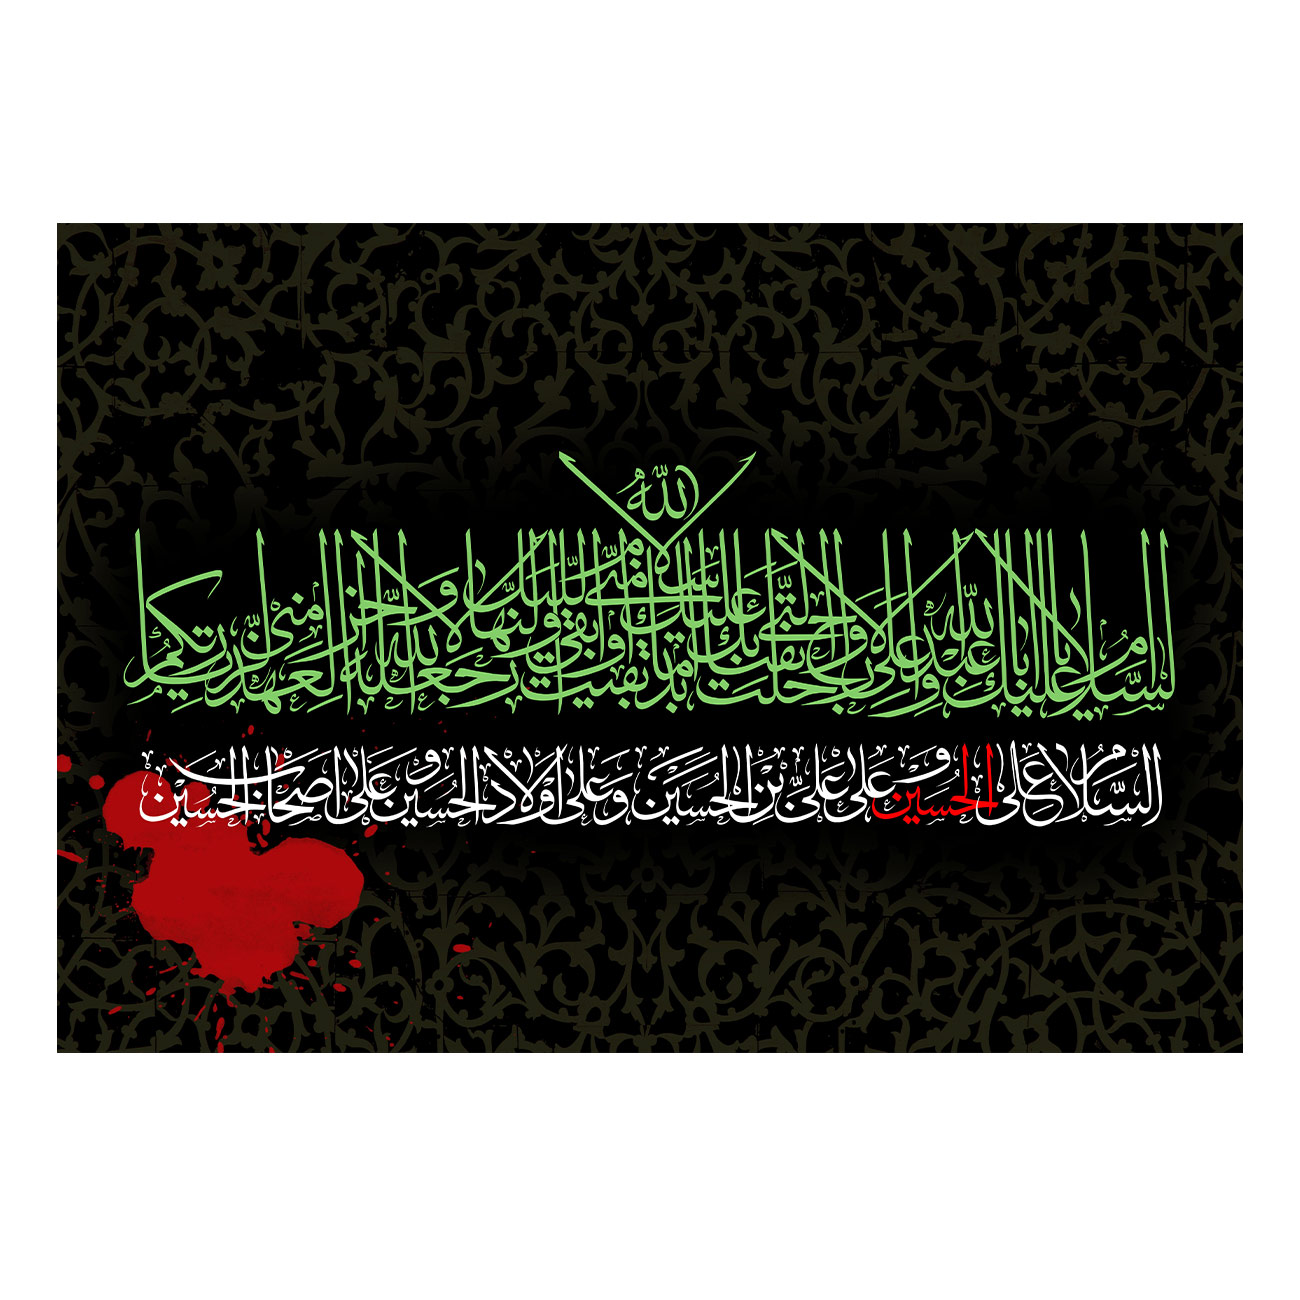  پرچم طرح شهادت مدل سلام بر حسین و خاندان او کد 2534H